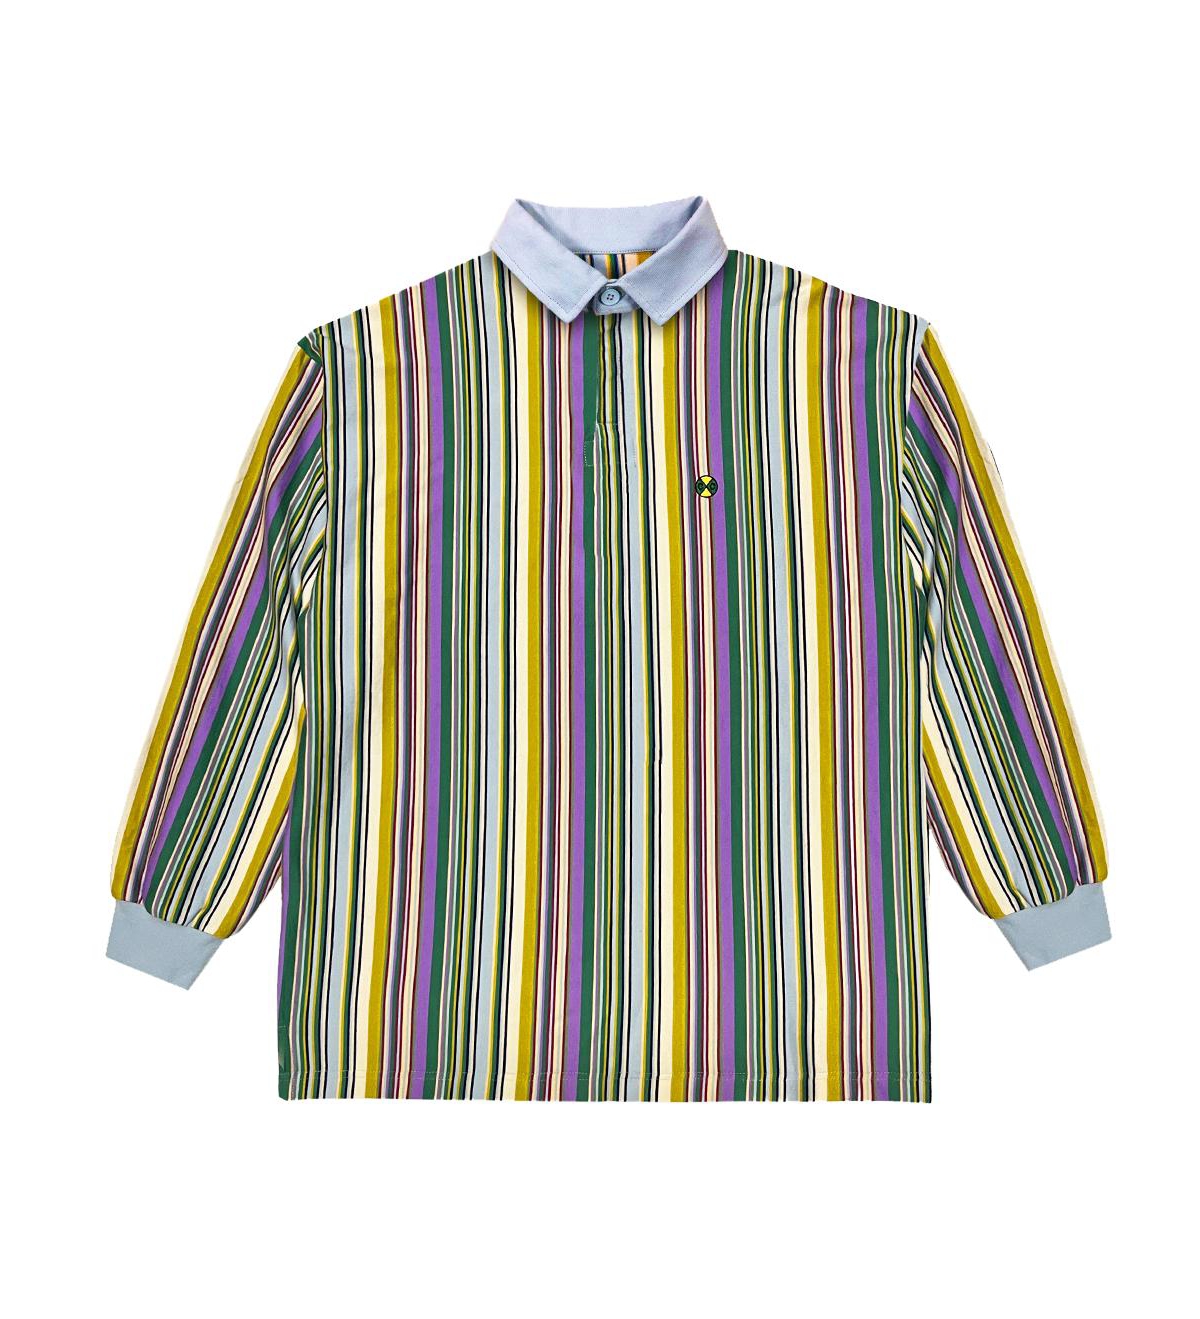 Mens Retro Stripe Rugby Shirt - Multi color